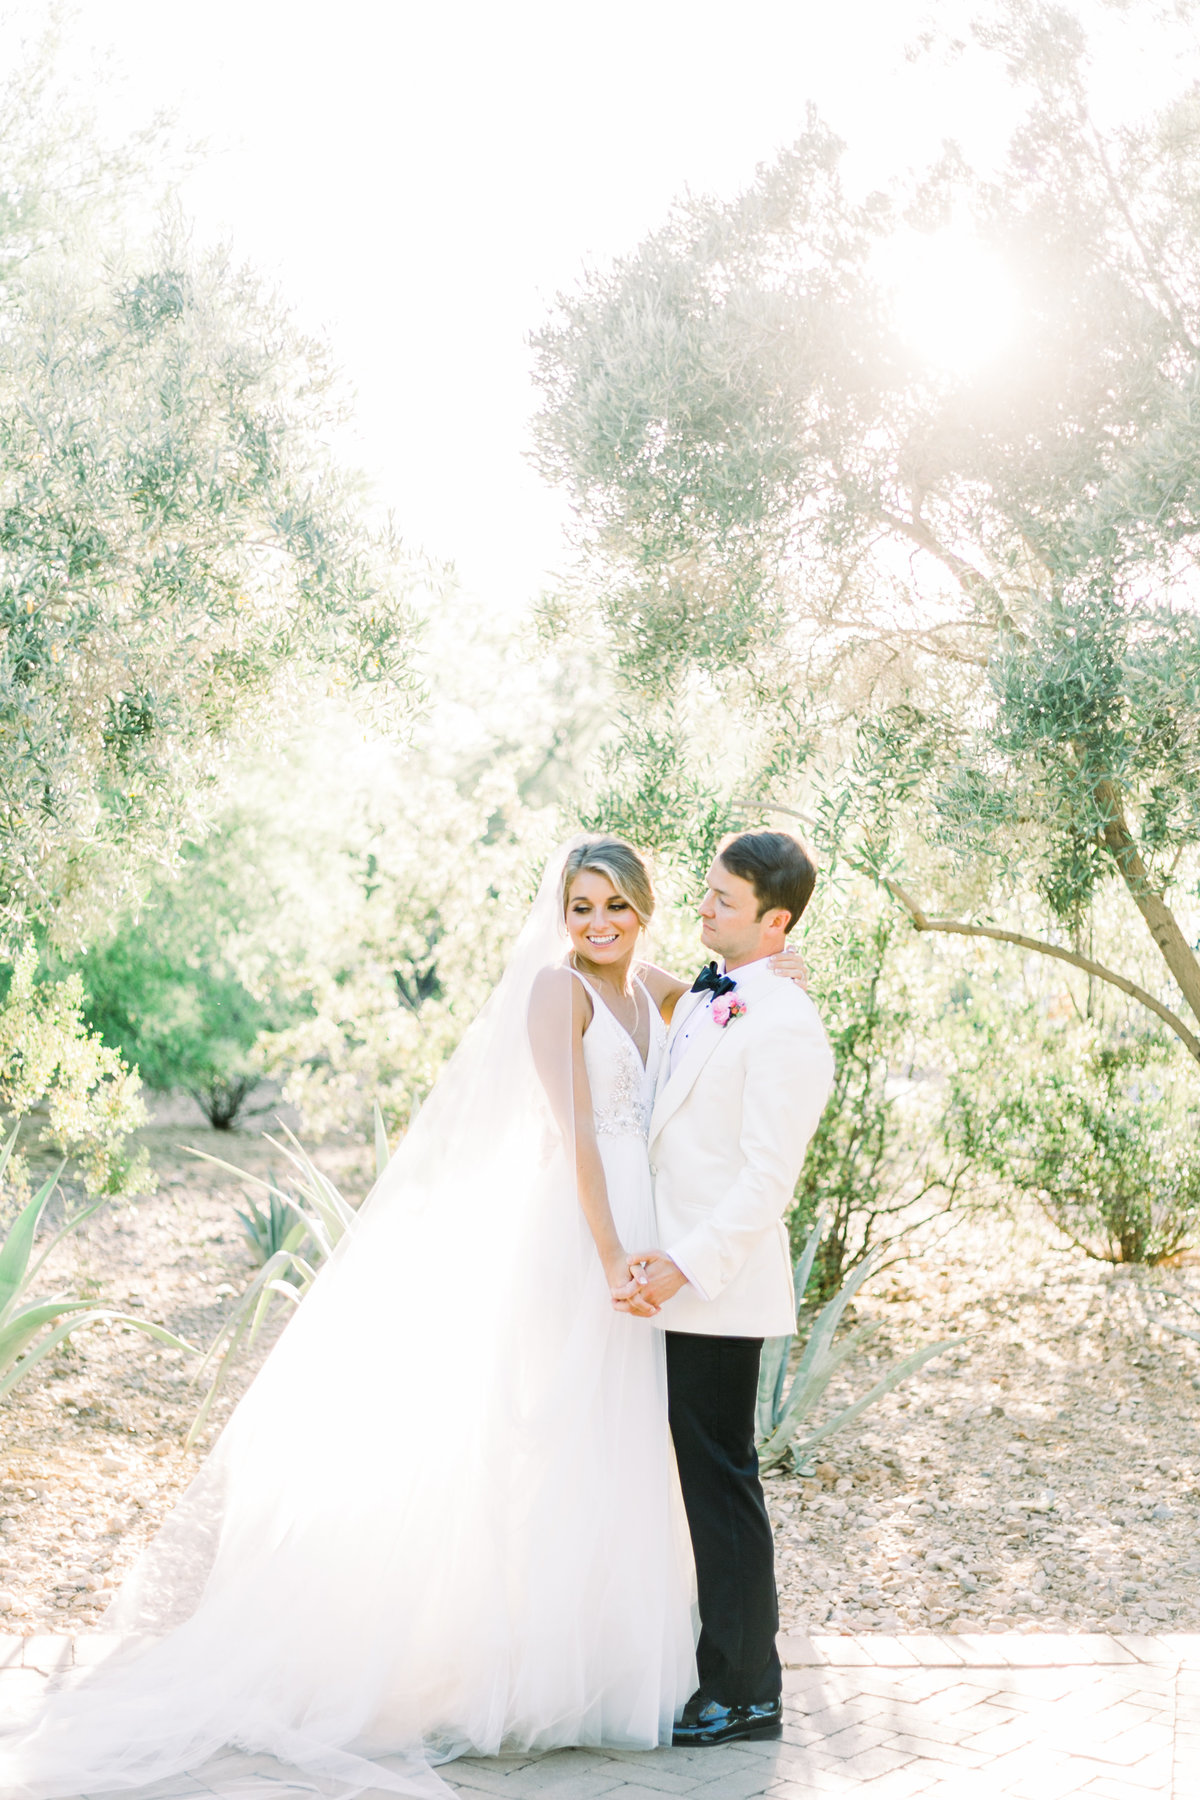 Karlie Colleen Photography - El Chorro Arizona Desert Wedding - Kylie & Doug-842